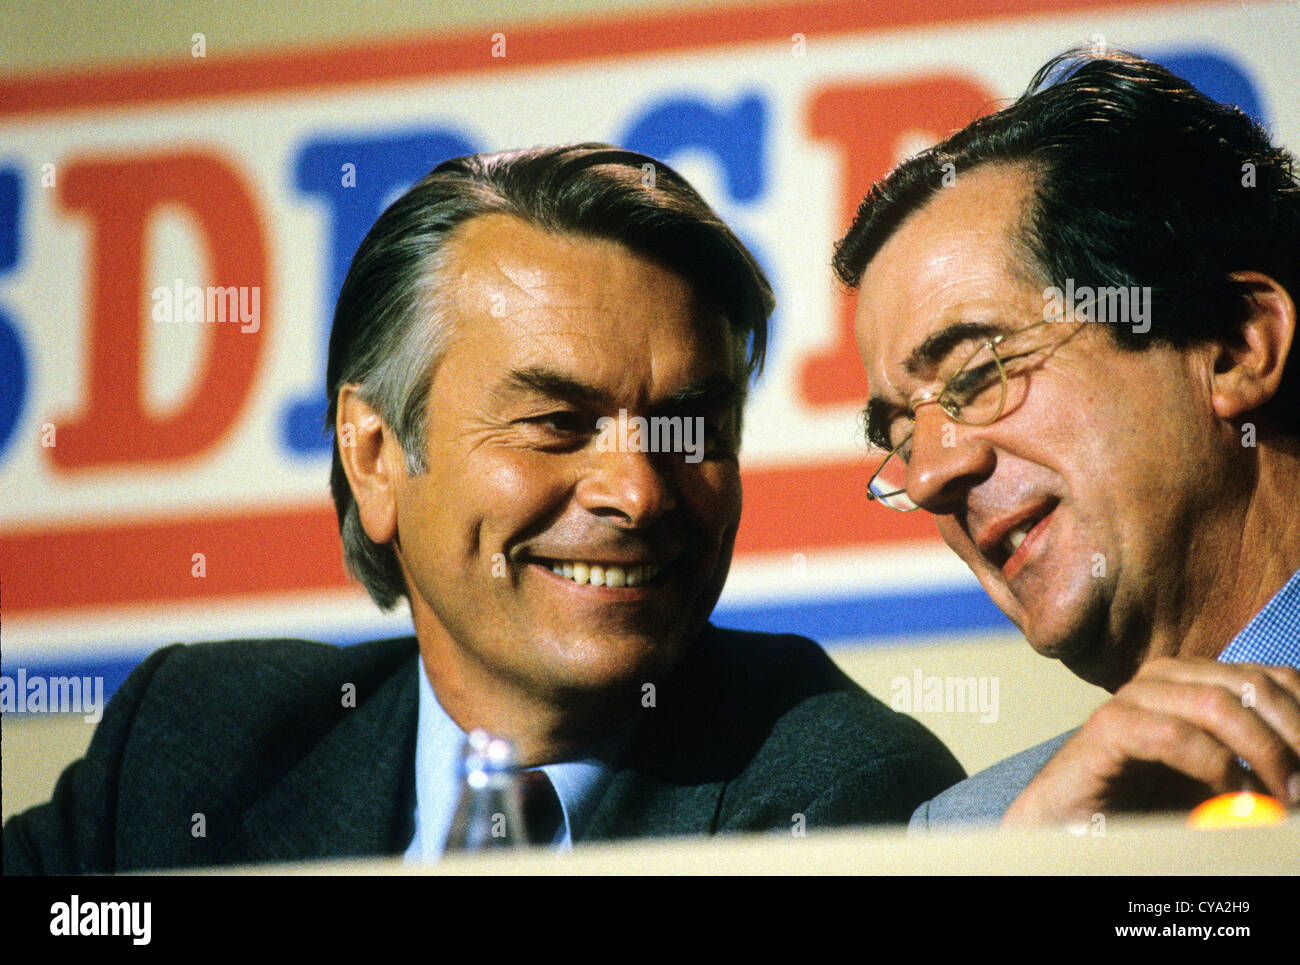 SDP-Konferenz, Torquay, England, UK. 1985. SDP, Sozialdemokratische Partei-Konferenz in Torquay, England im Jahr 1985. Stockfoto